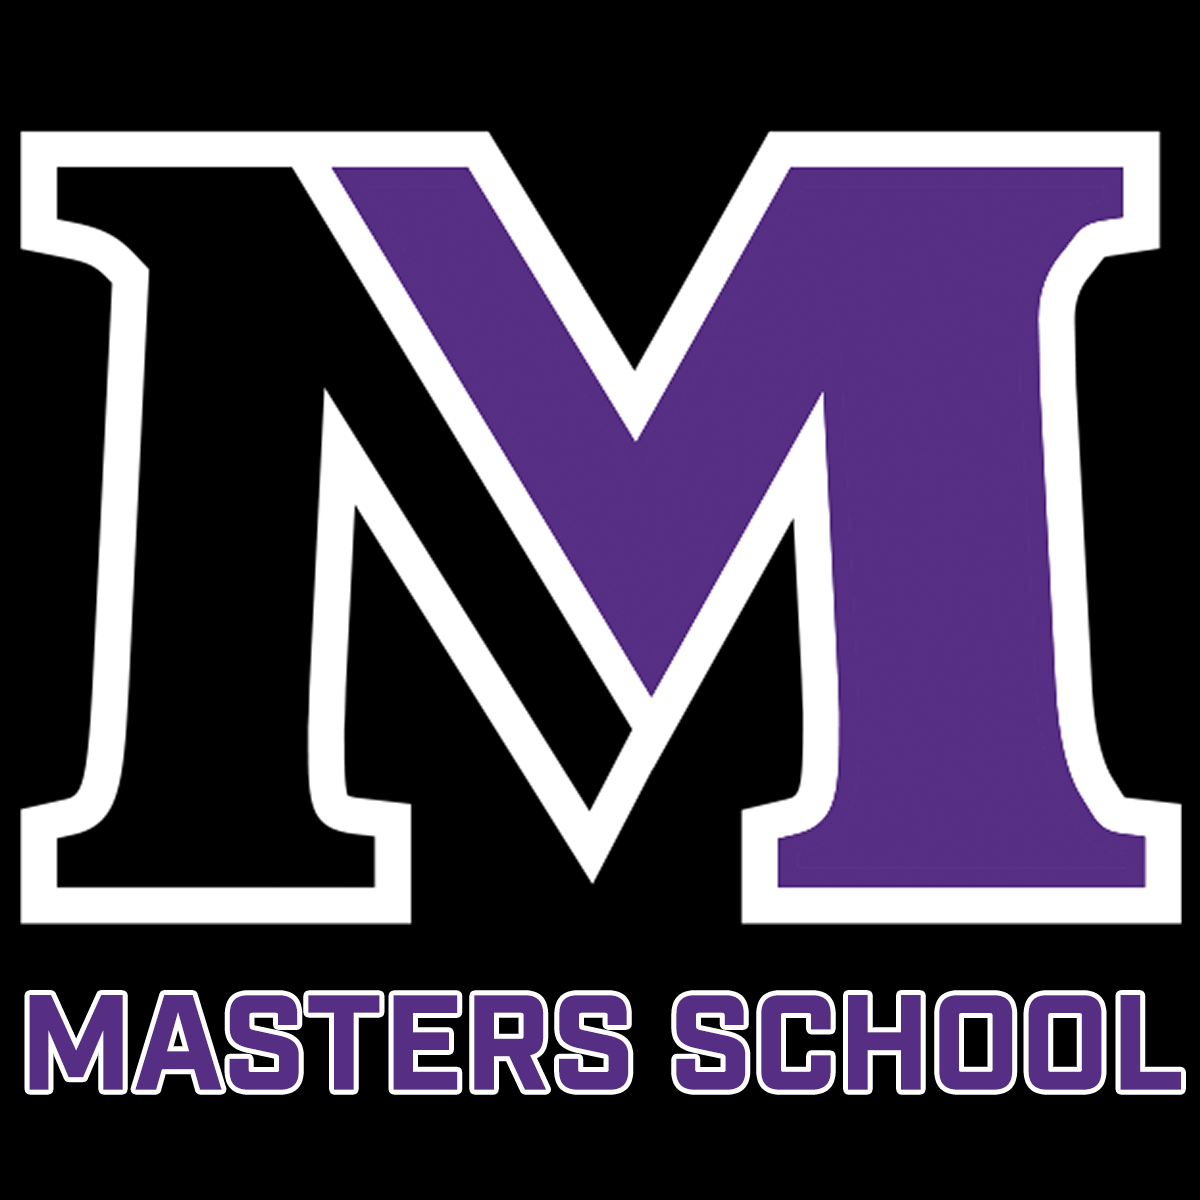 Masters School Team Store